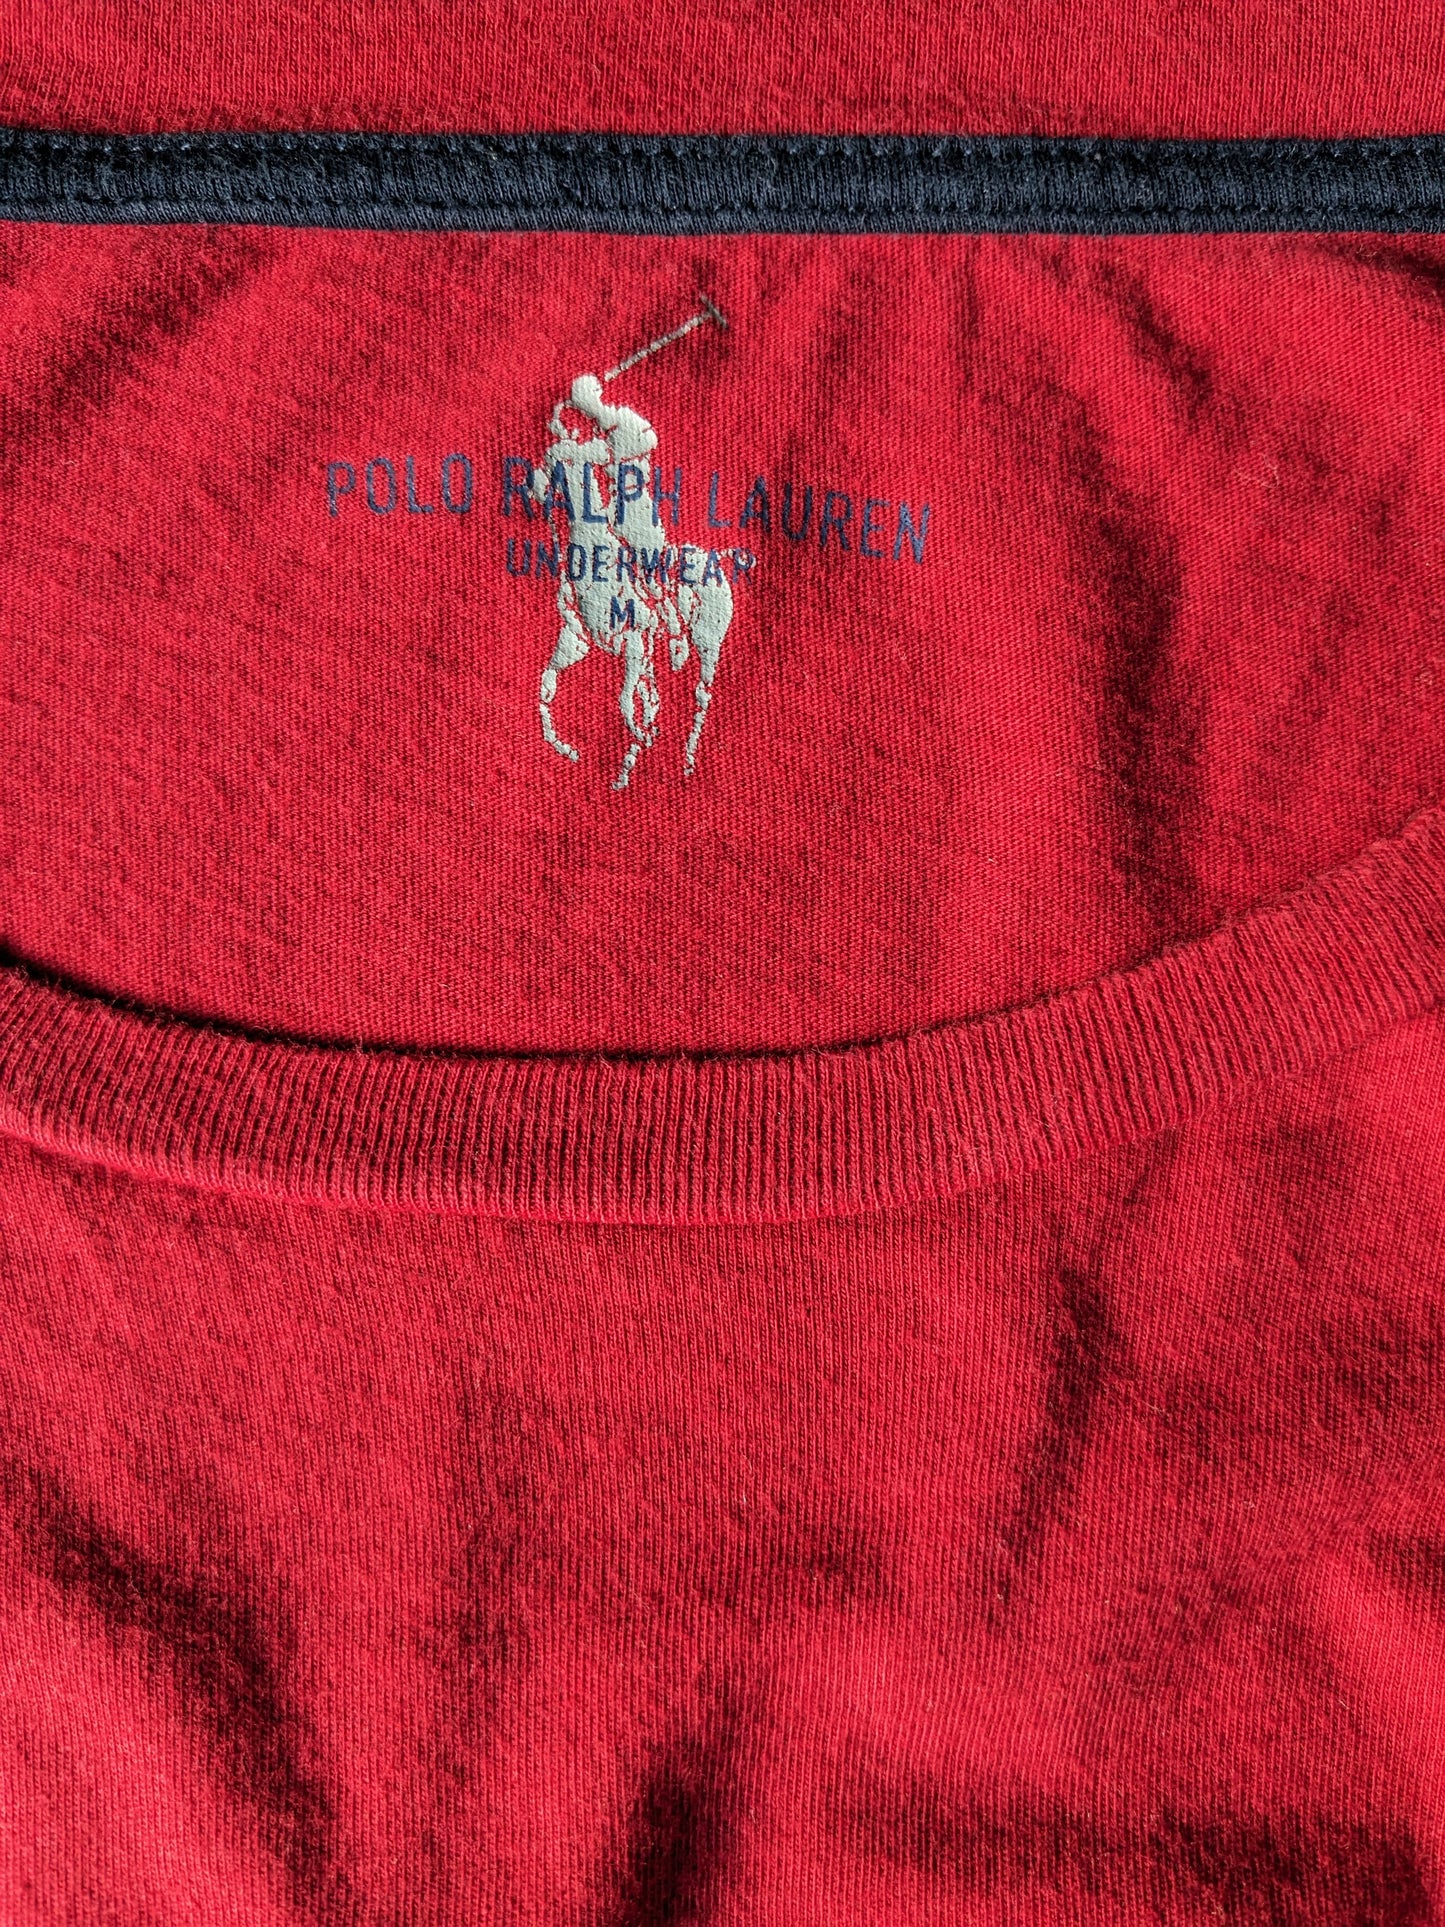 Polo Ralph Lauren underwear longsleeve. Rood gekleurd. Maat M.